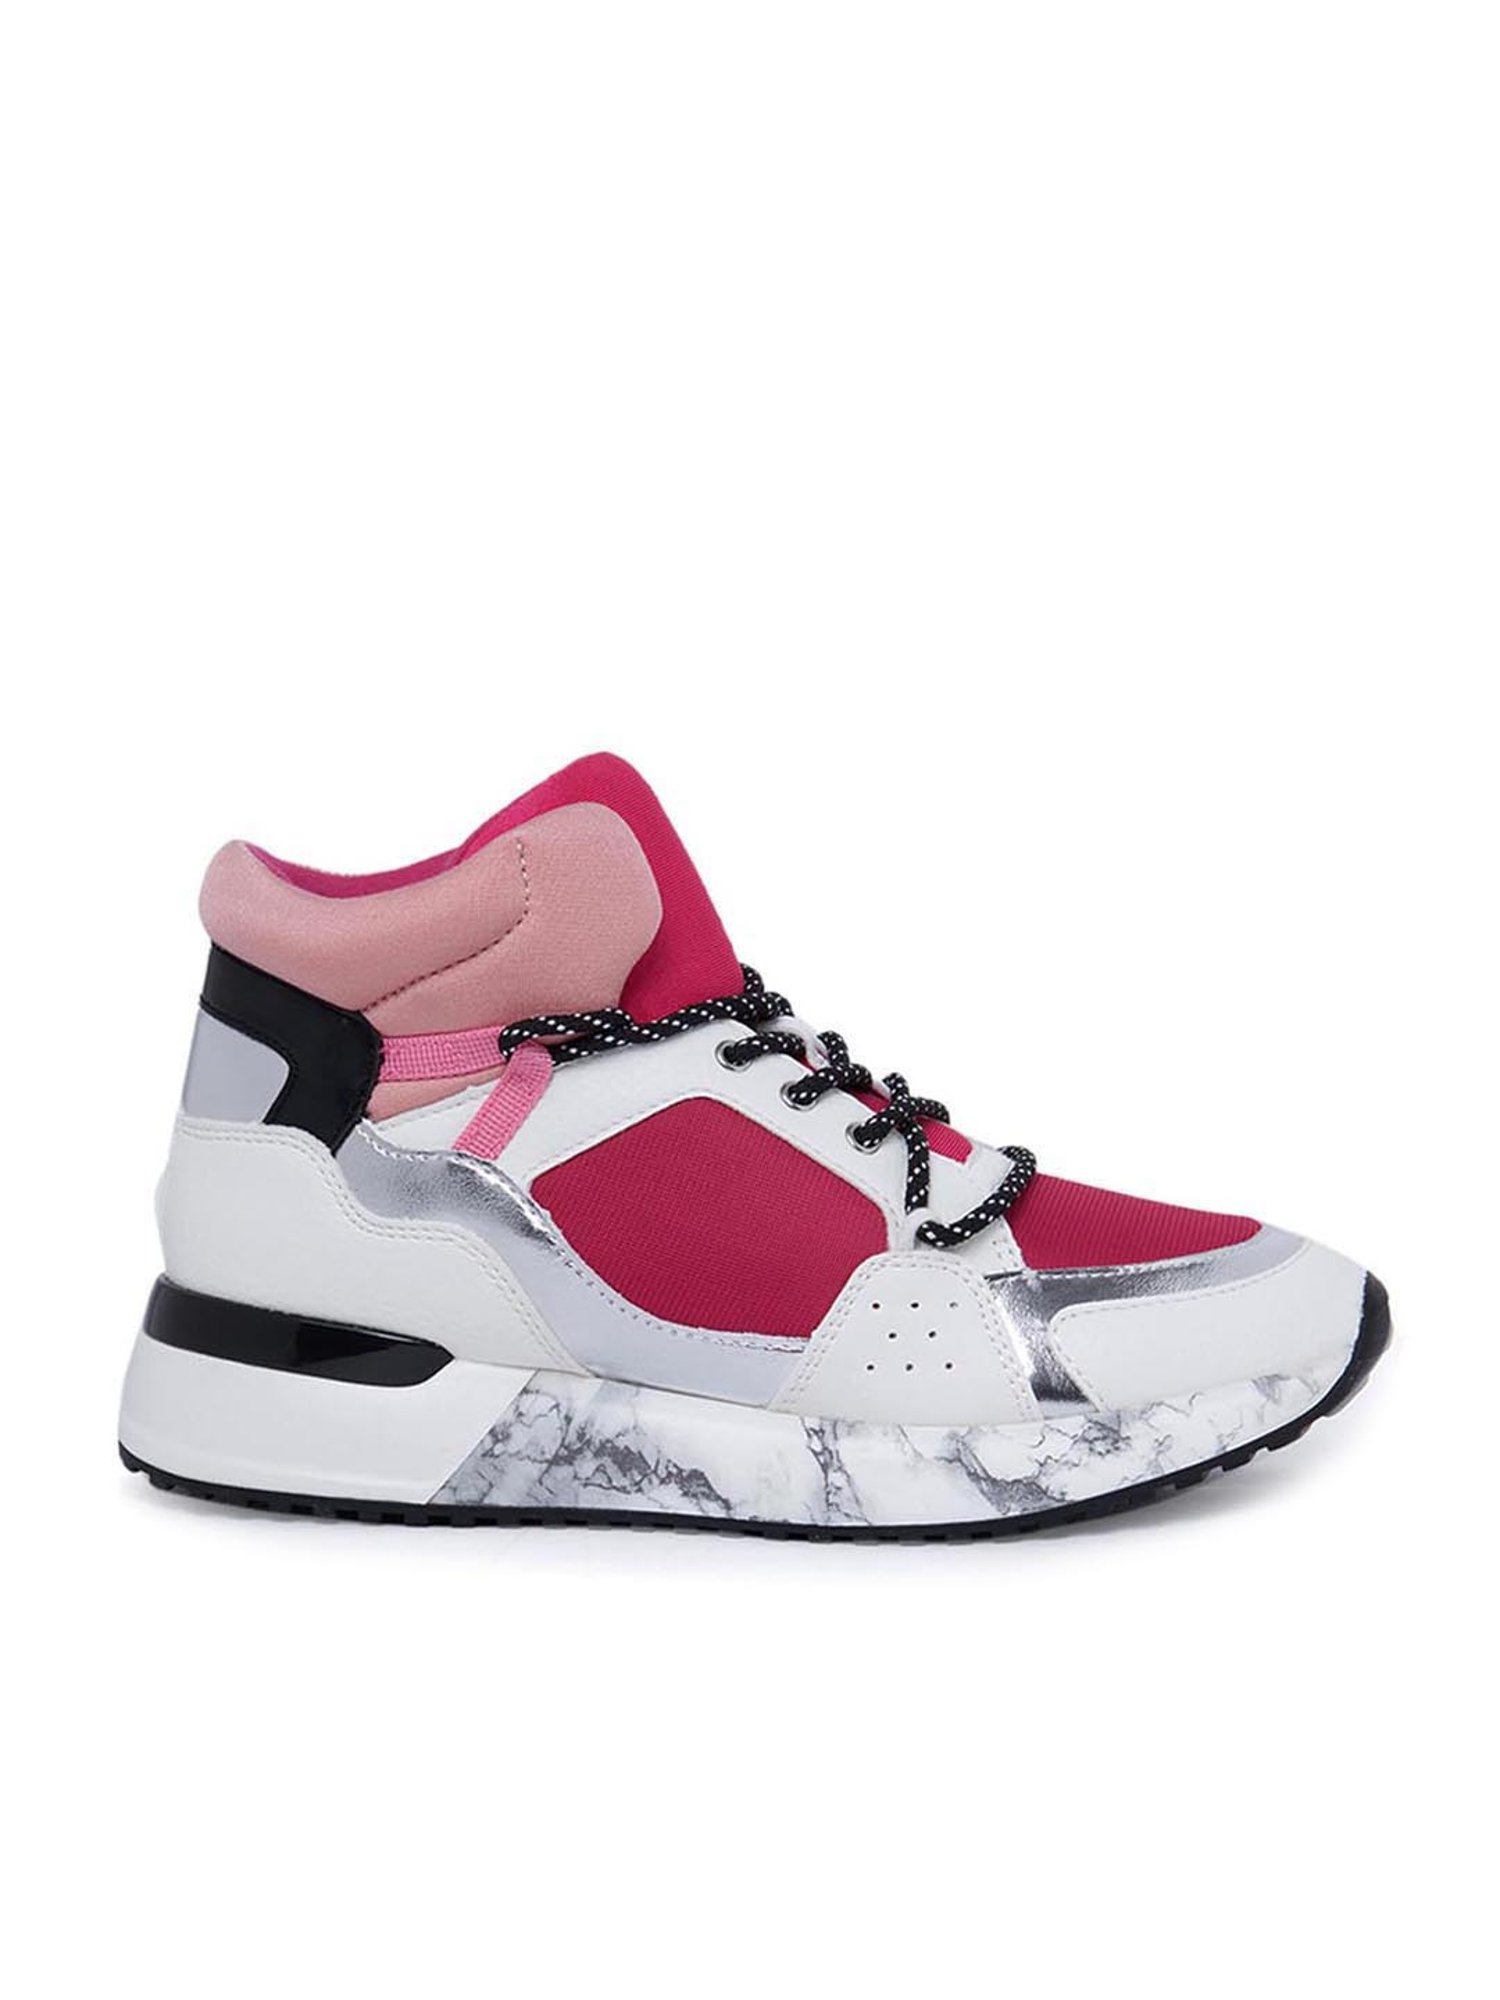 ALDO Zipper Athletic Shoes for Women | Mercari